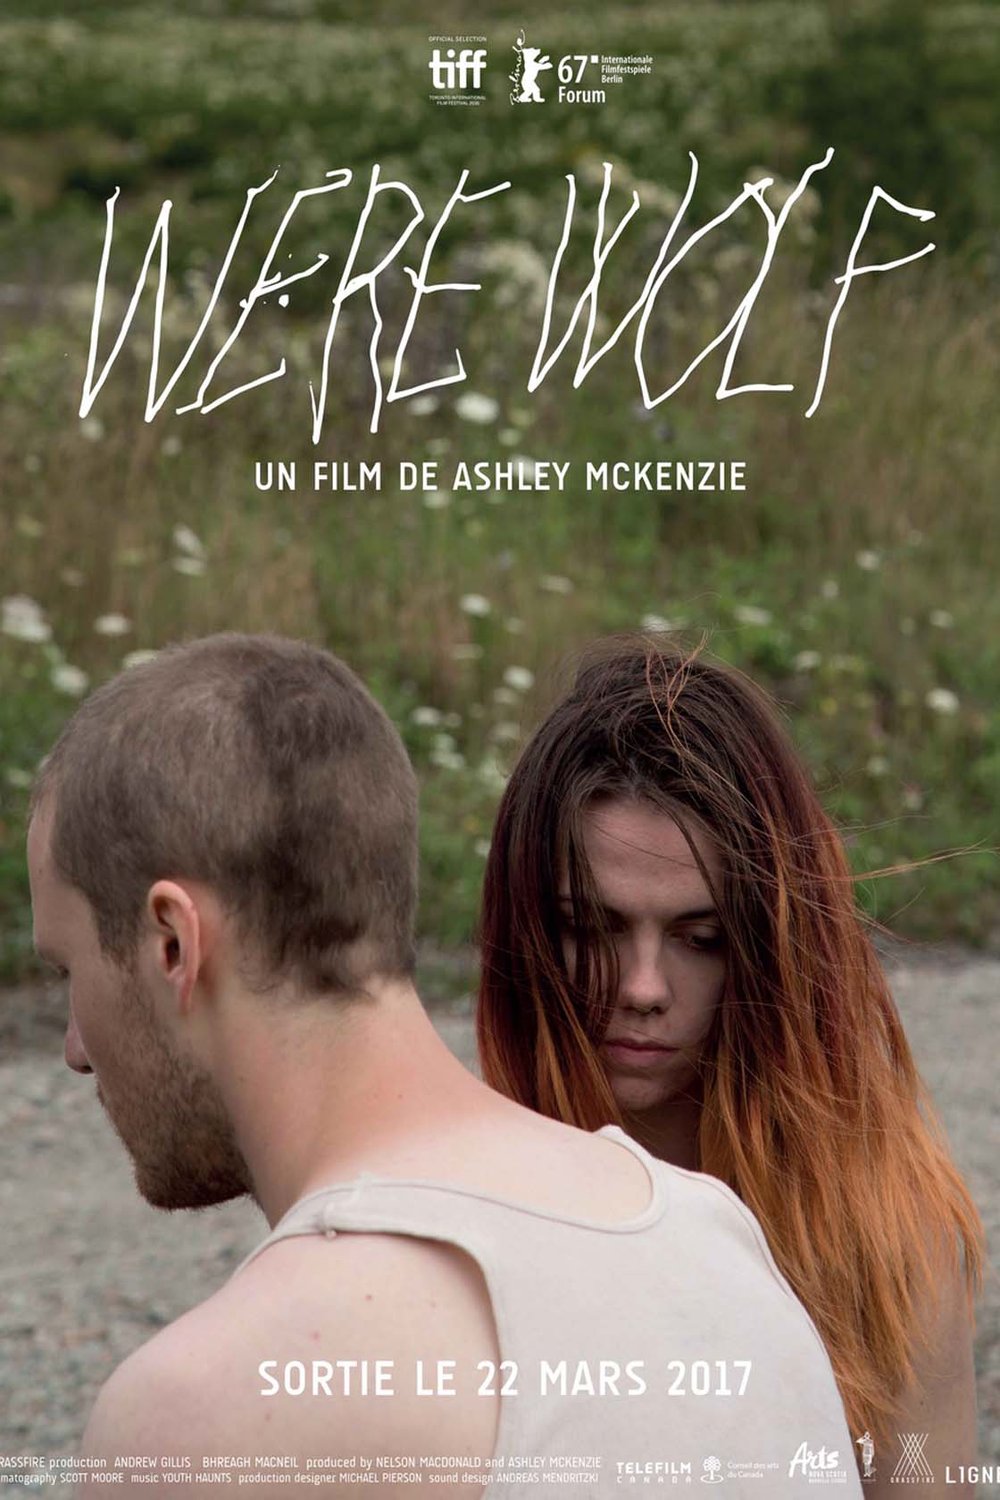 Poster of the movie Werewolf